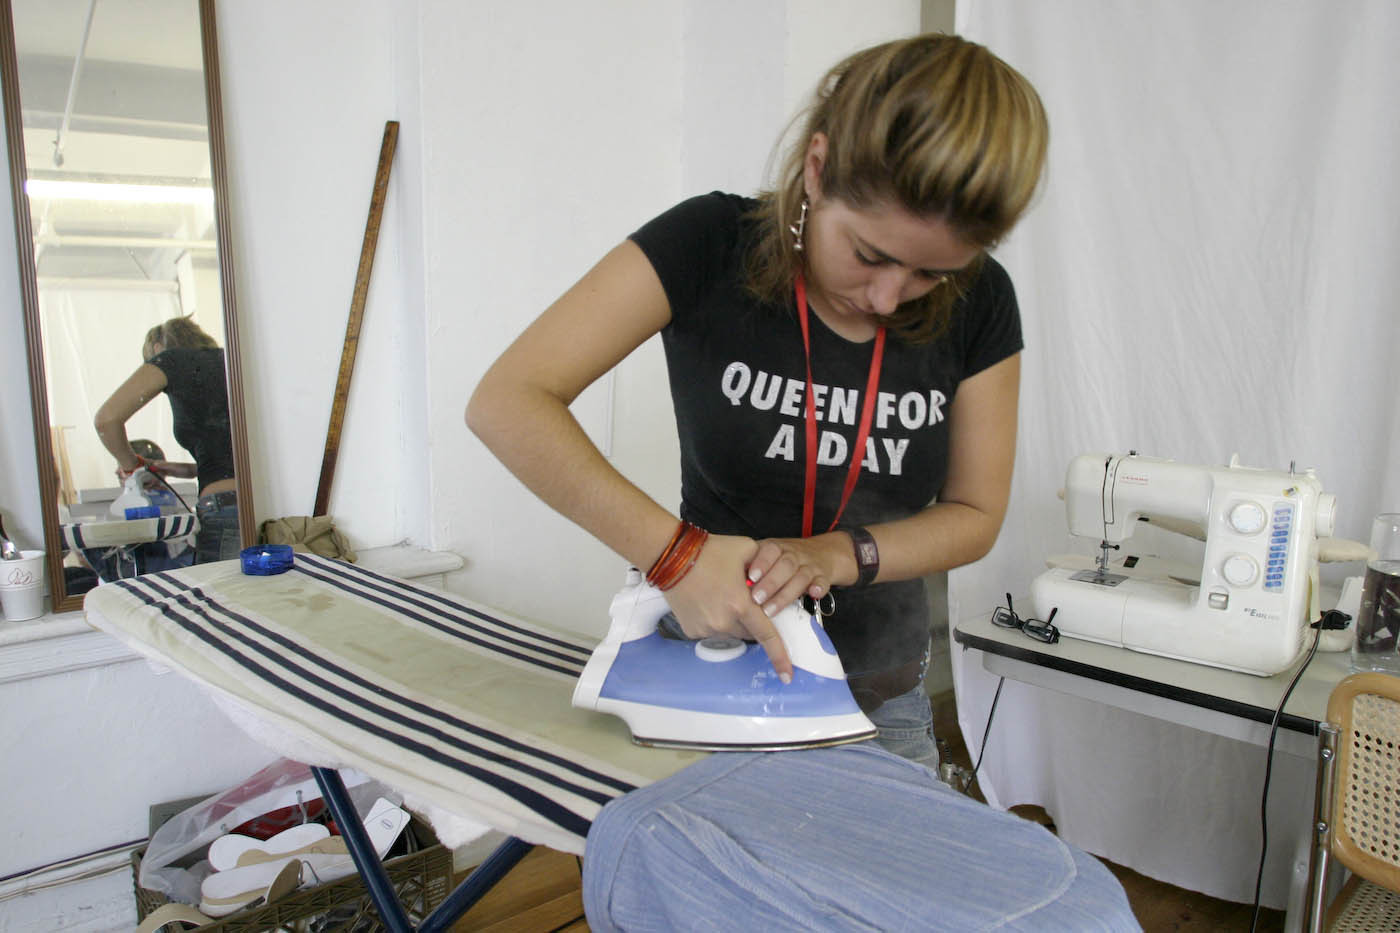  : FEATURE: SEBASTIAN PONS - Fashion from Mallorca to Manhattan : Viviane Moos |  Documentary Photographer